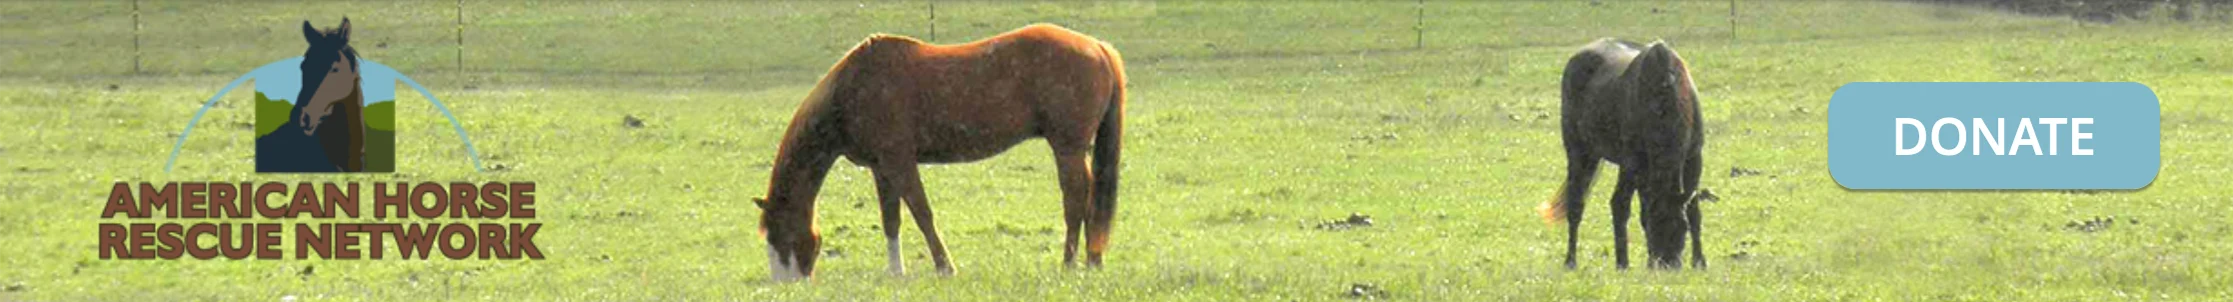 American Horse Rescue Network